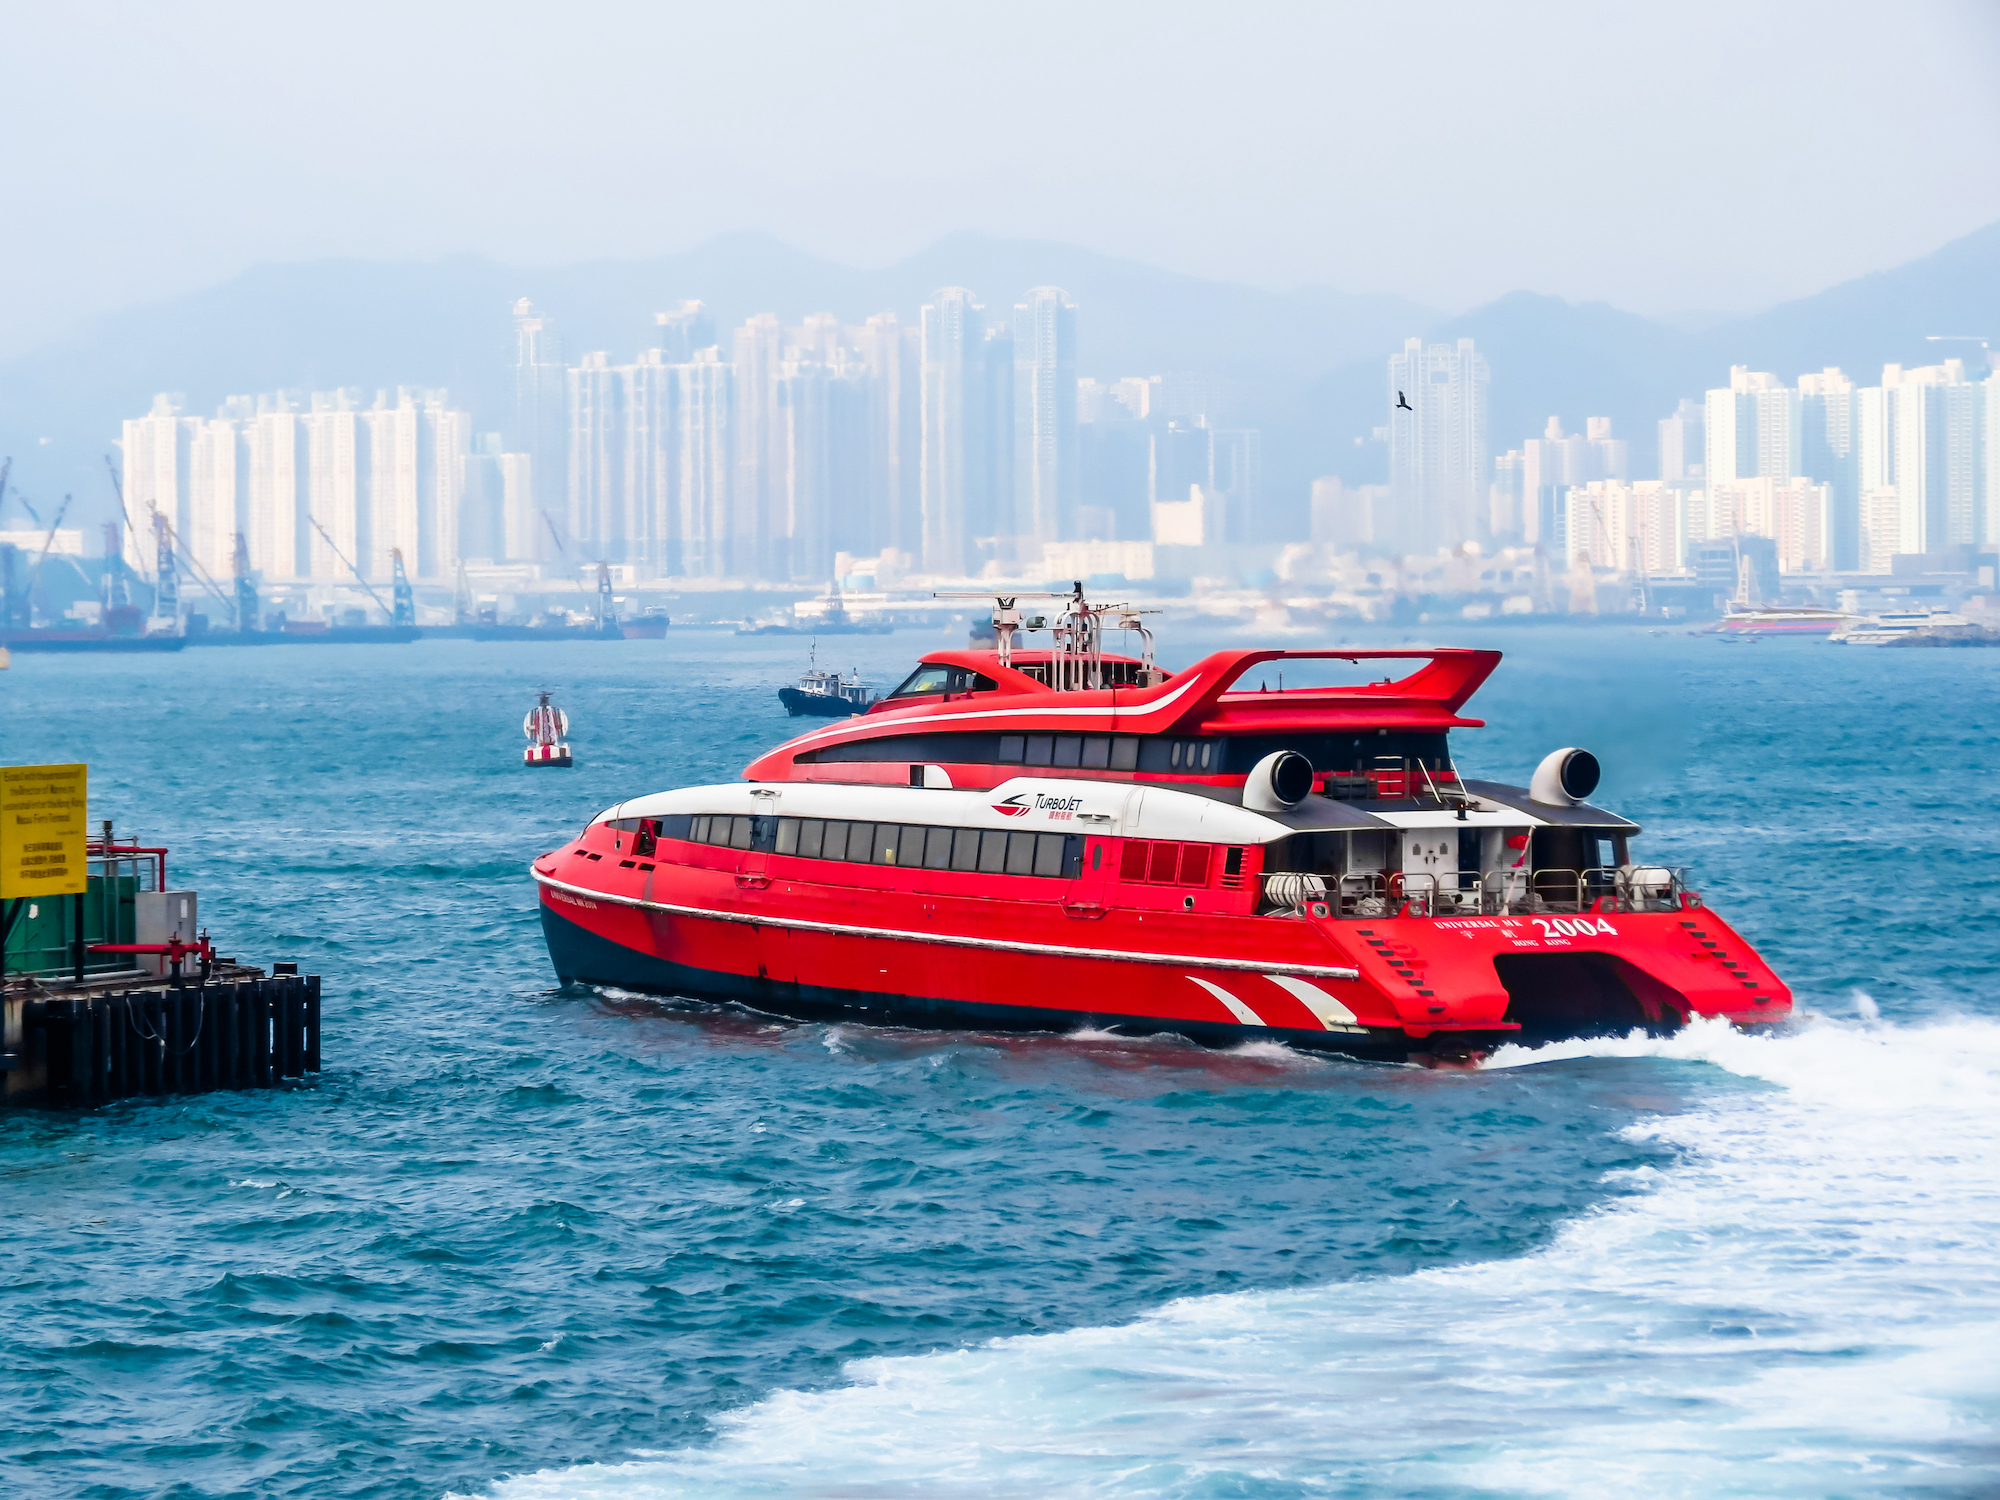 Taipa-Kowloon ferry services resume this Friday